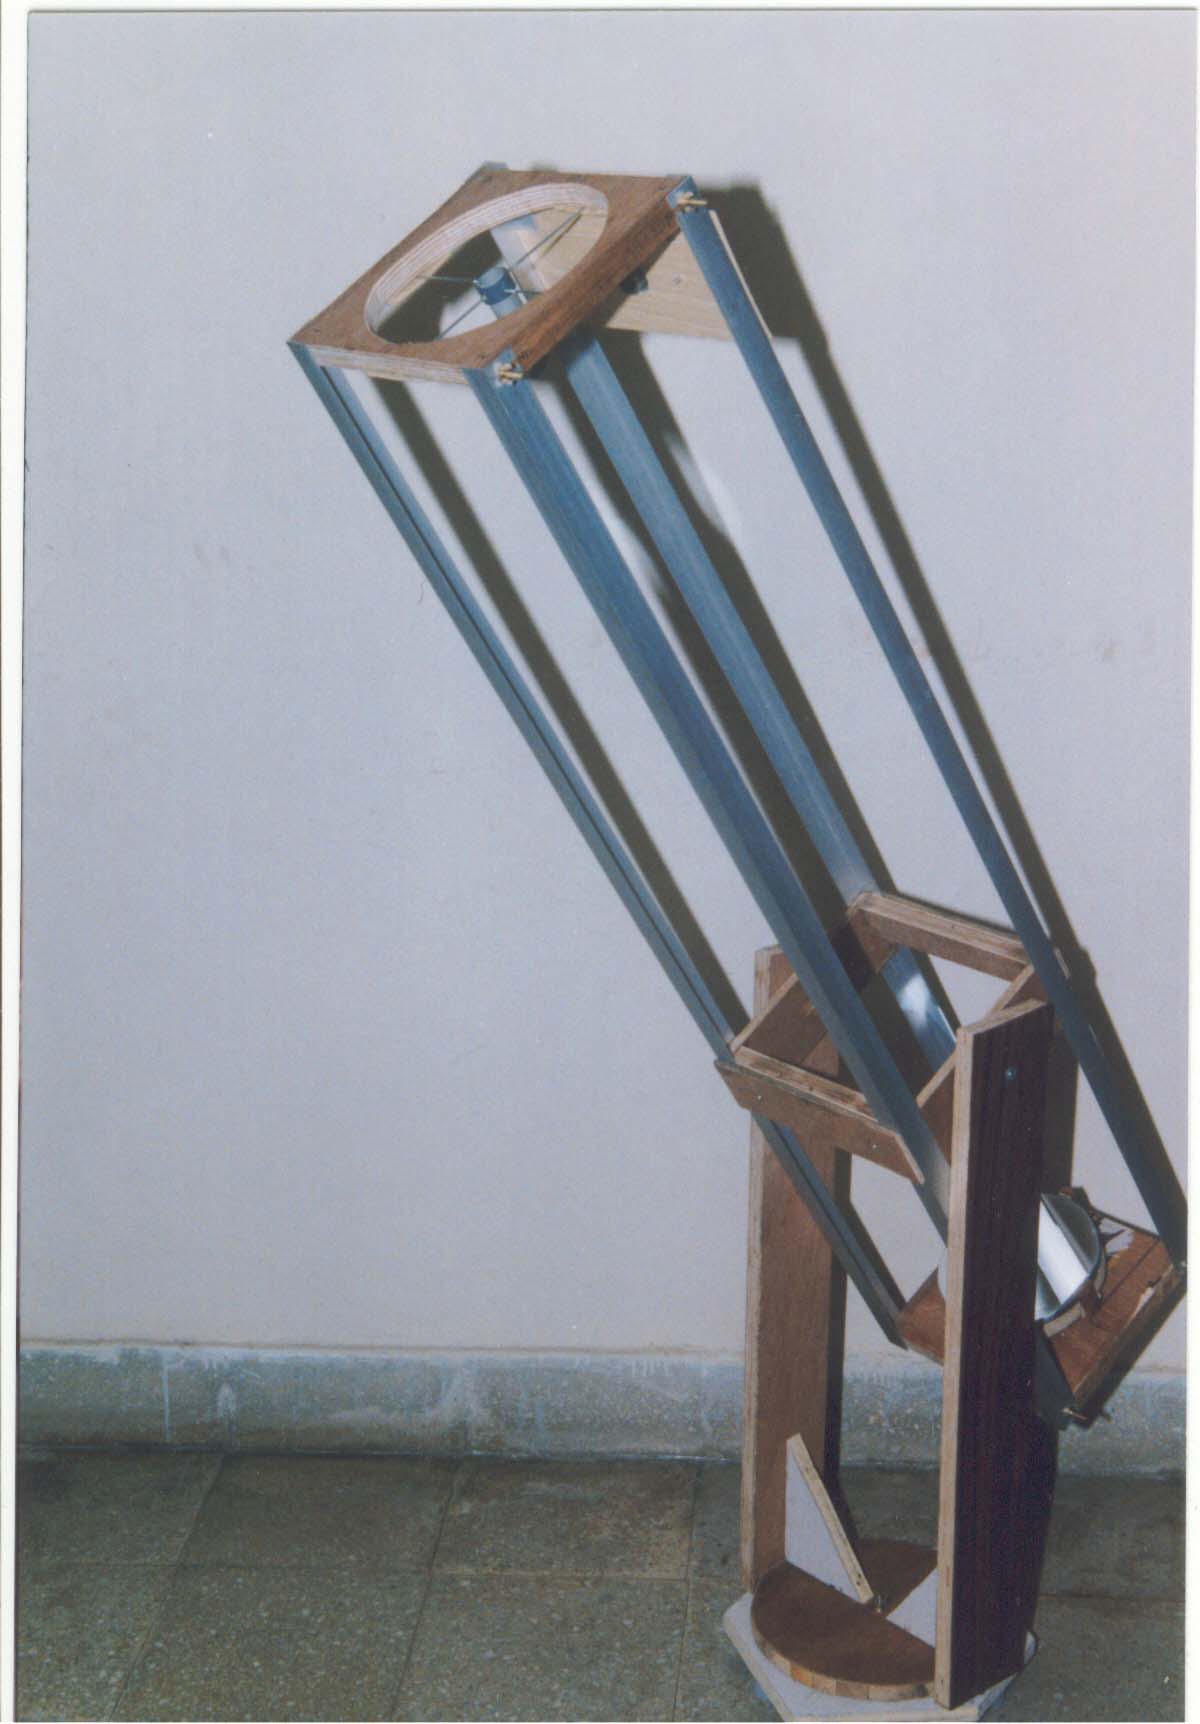 The 6-inch Dobsonian Telescope